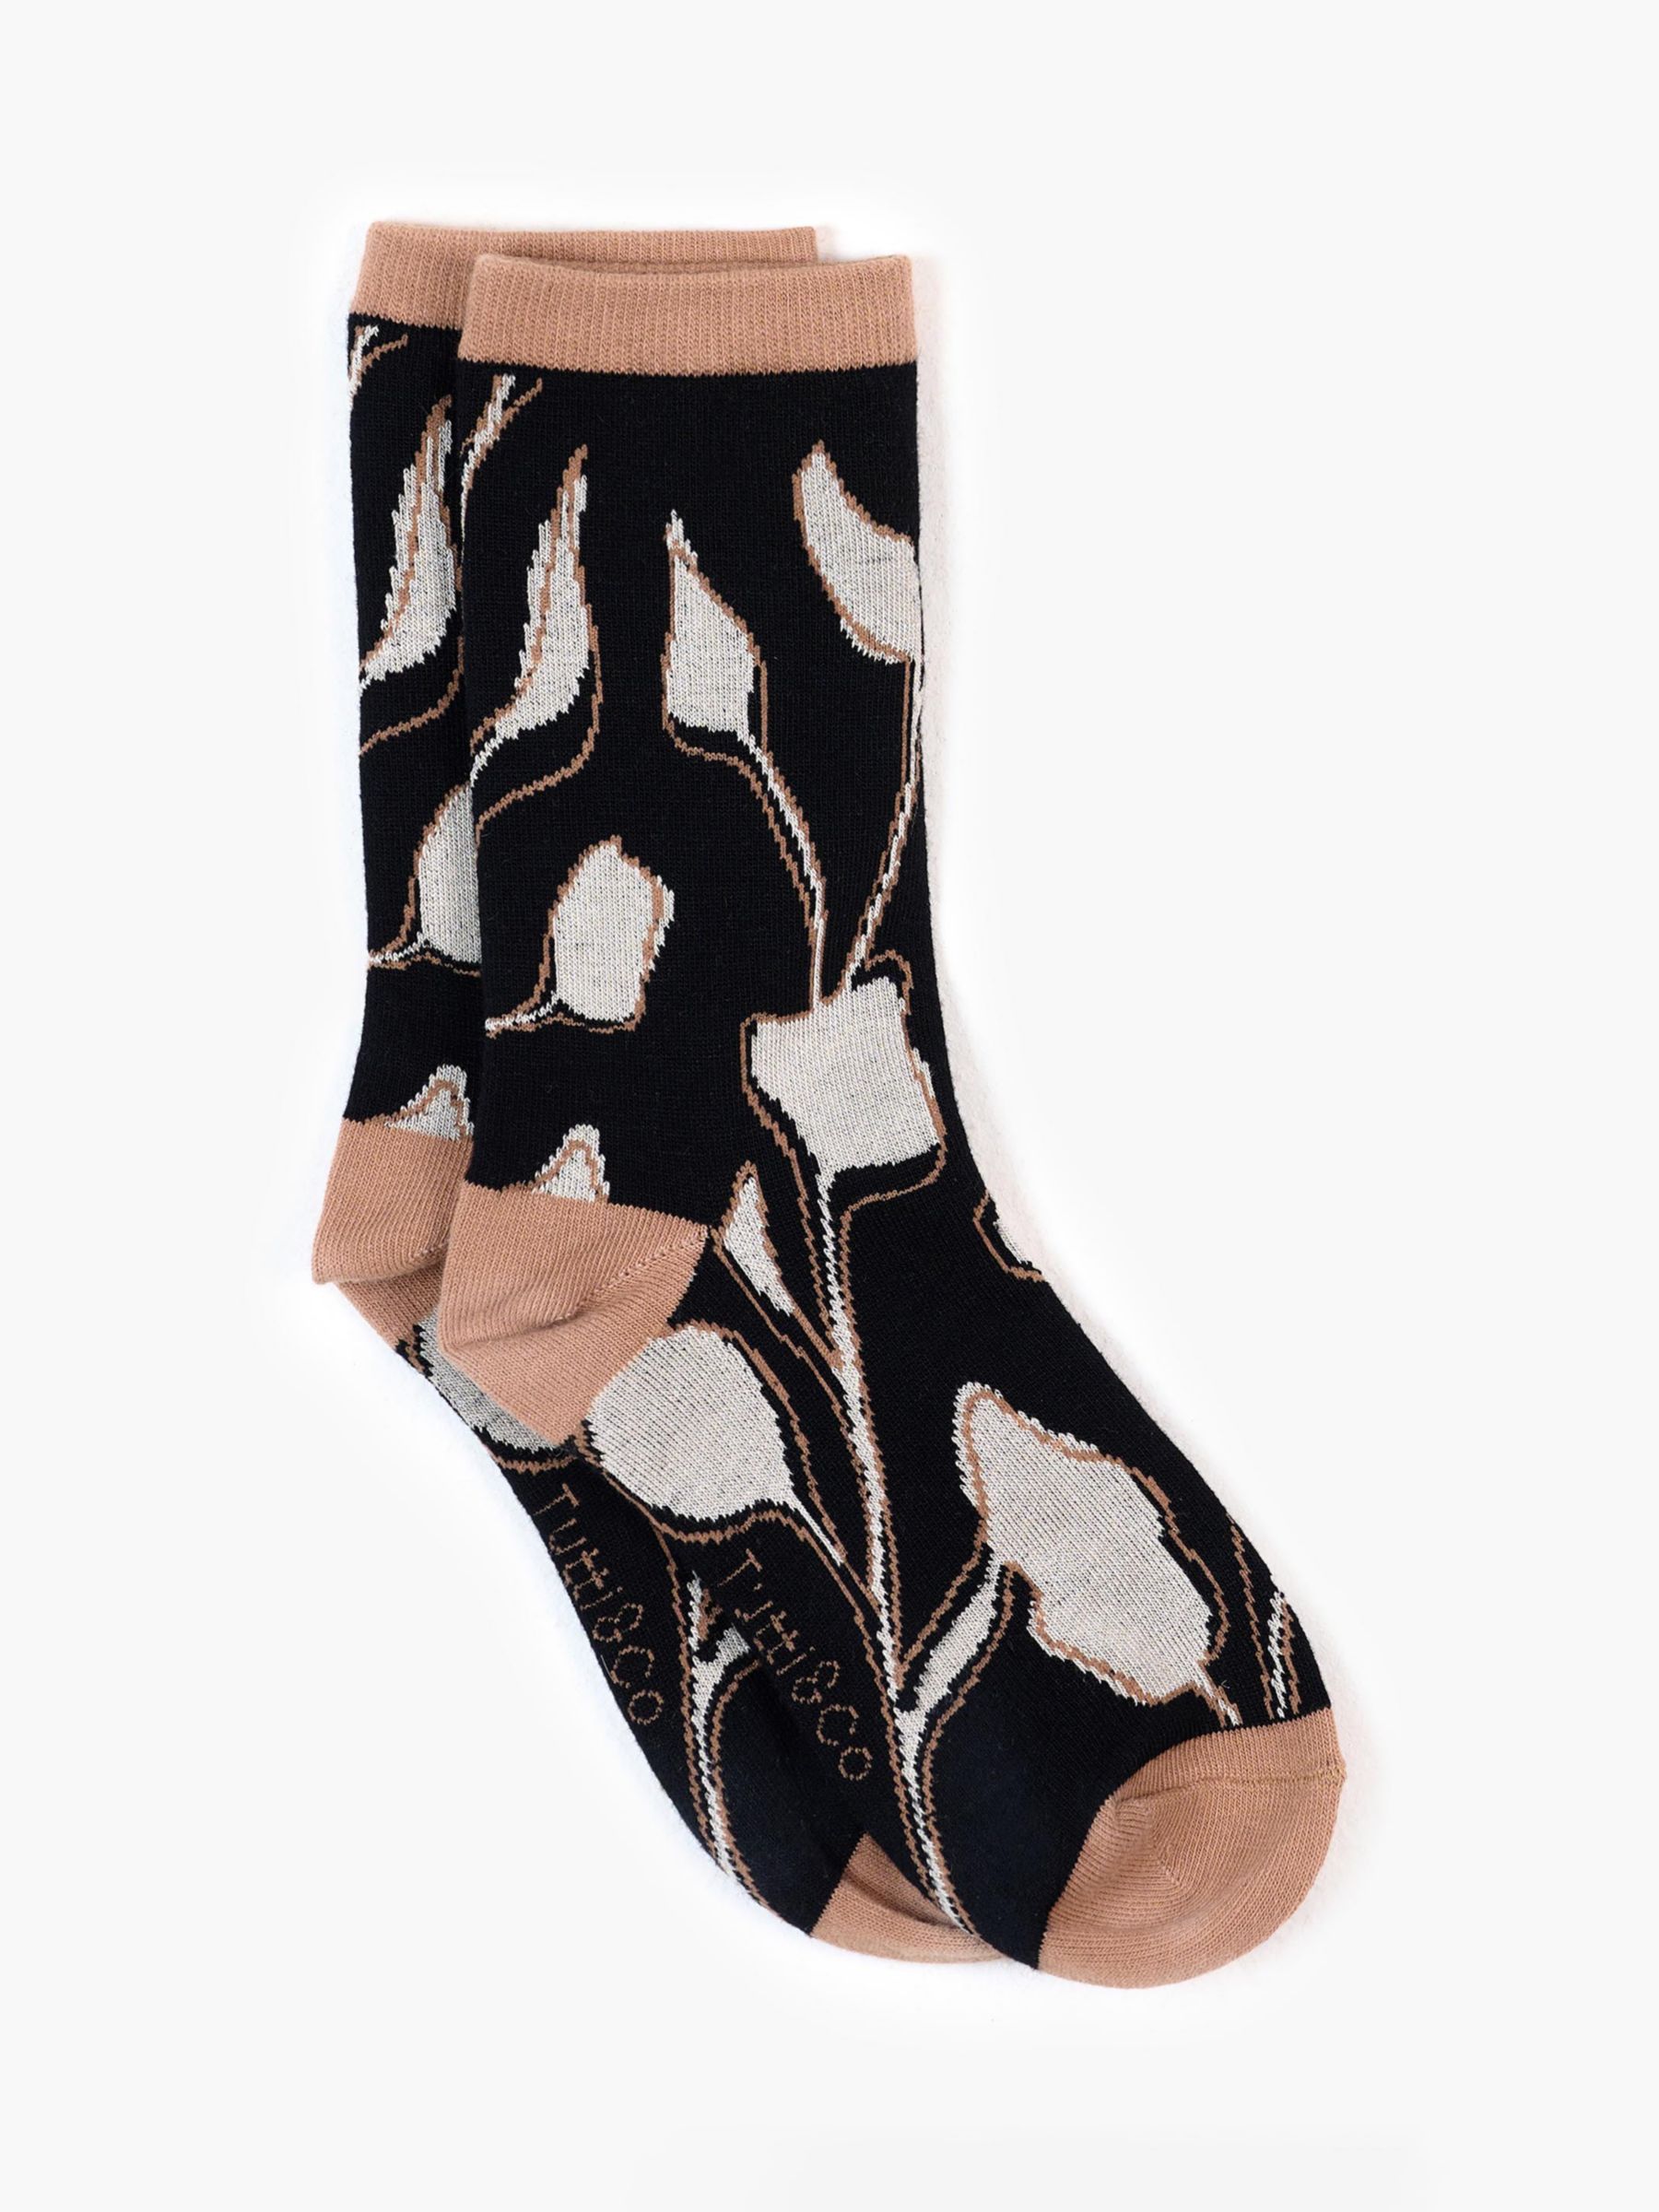 Buy Tutti & Co Wildflower & Driftwood Patterned Socks, Pack of 2, Black/Multi Online at johnlewis.com